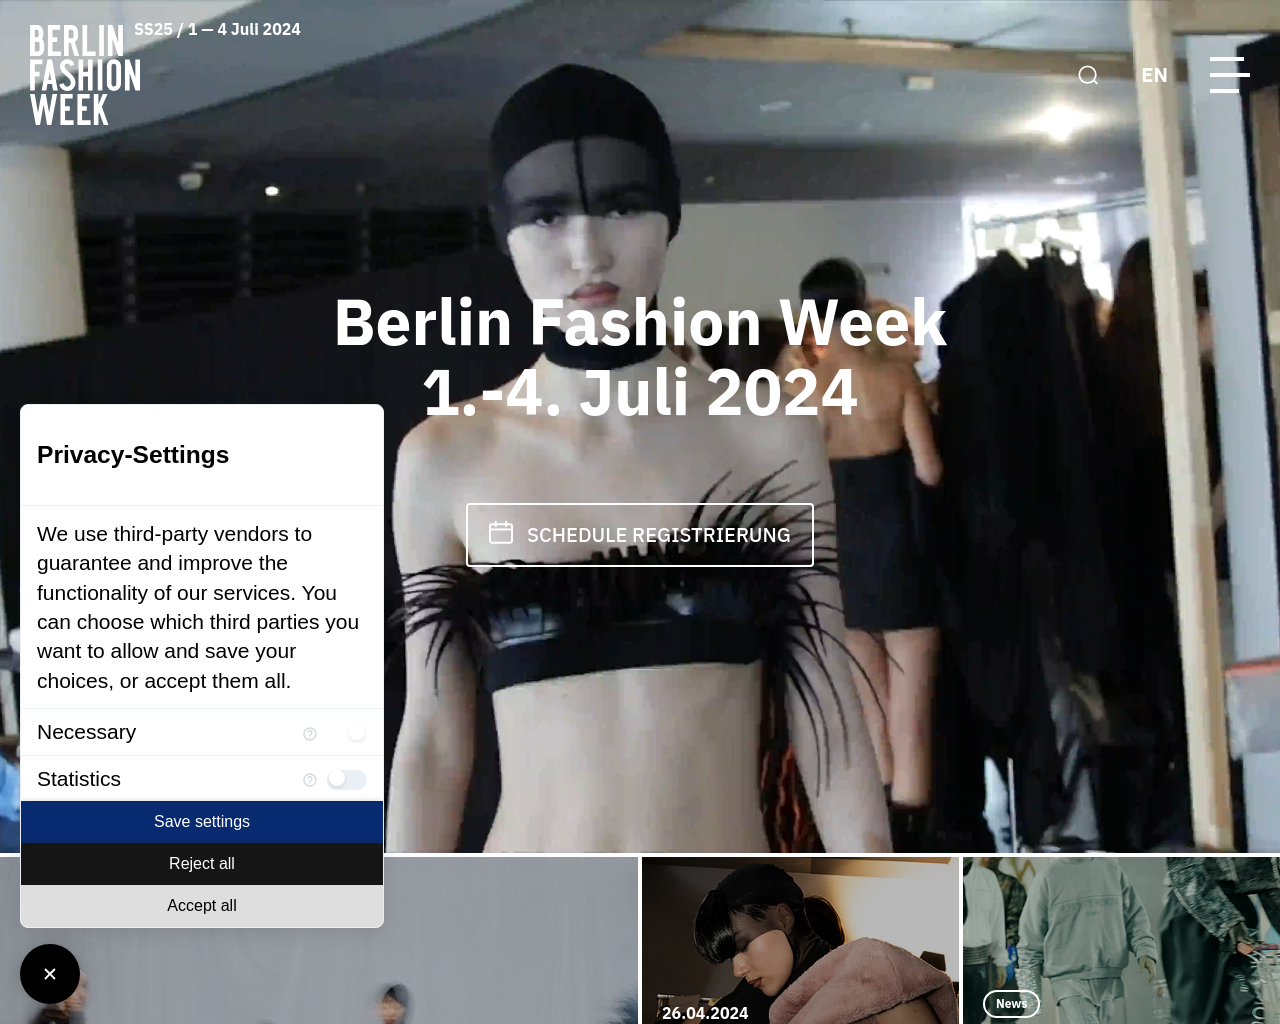 fashion-week-berlin.com